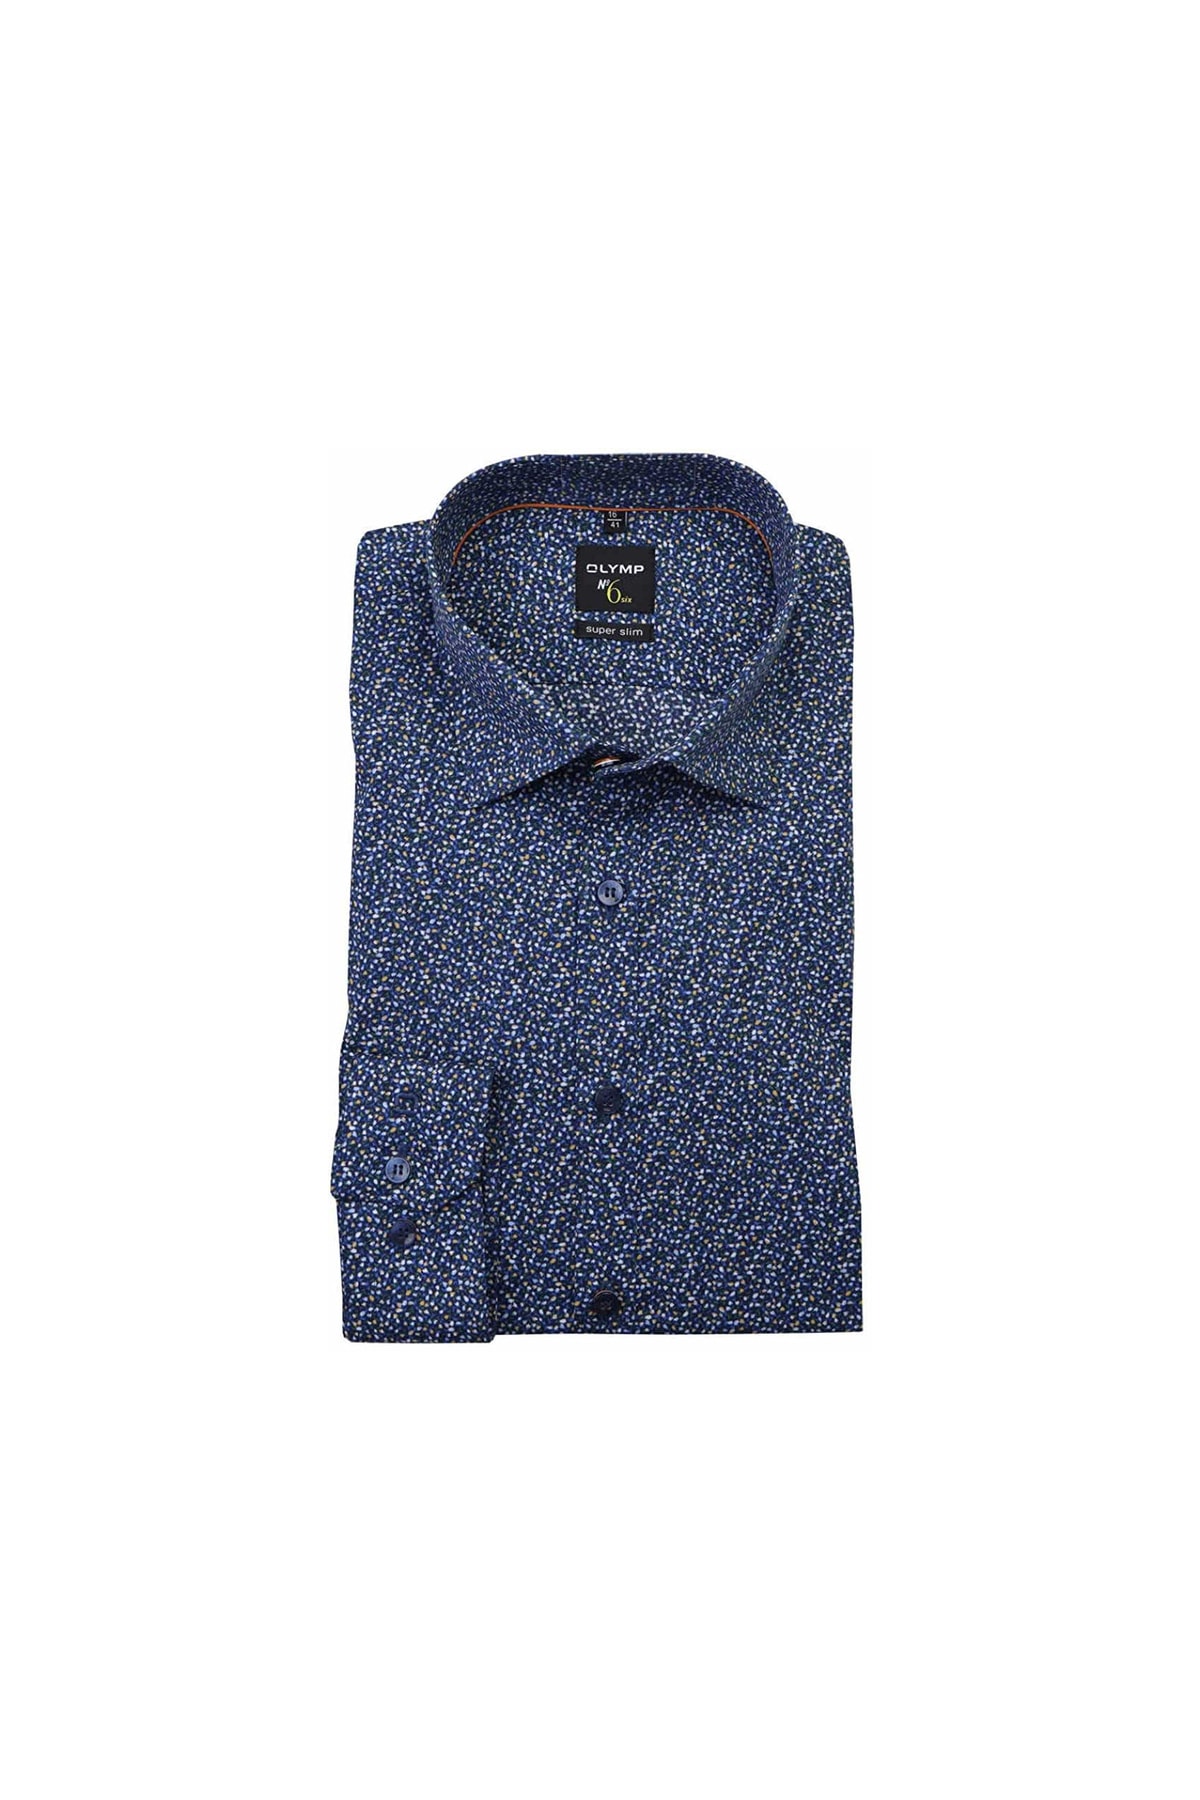 OLYMP Hemd Blau Slim Fit Fast ausverkauft